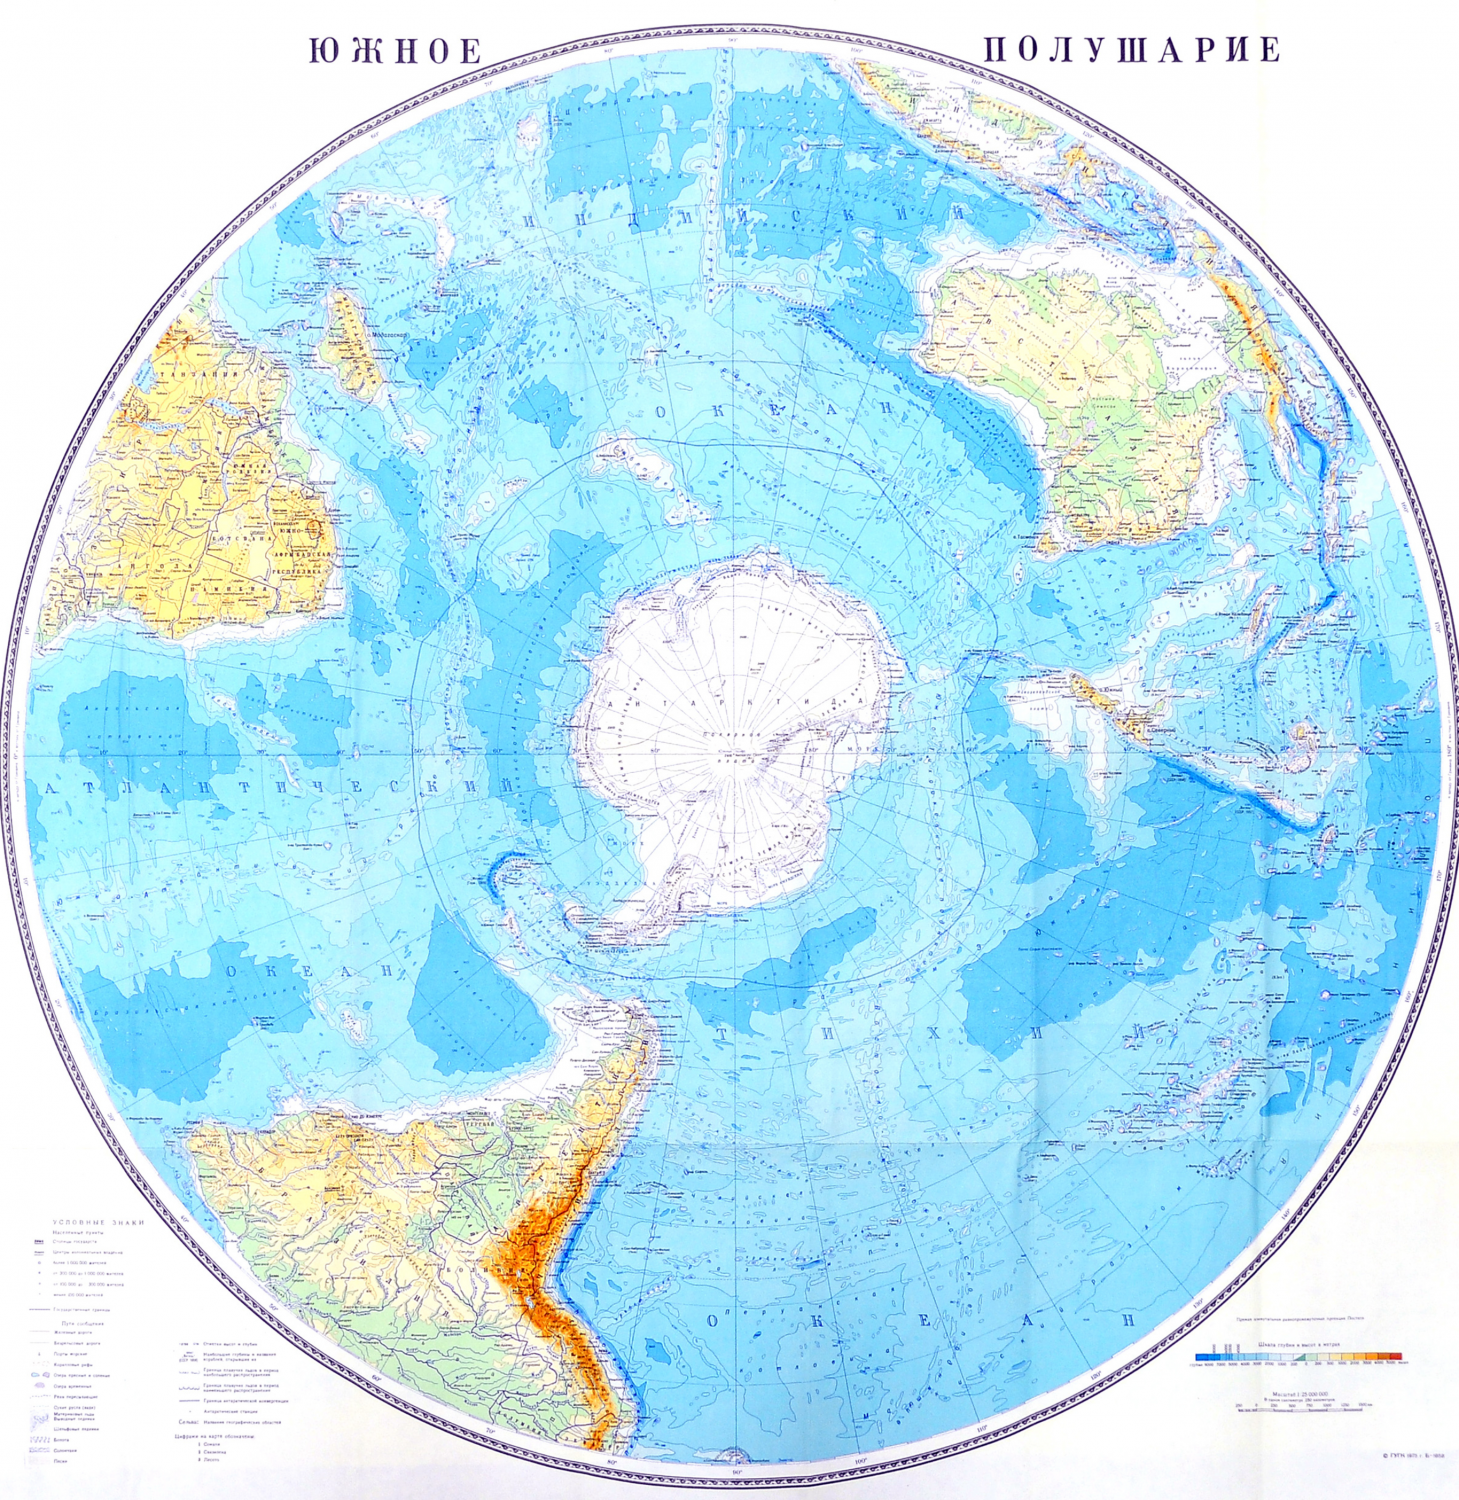 Южное полушарие на карте. Карта Южного полушария земли. Южное полушарие земли. Северное полушарие на карте. Карта материков южного полушария